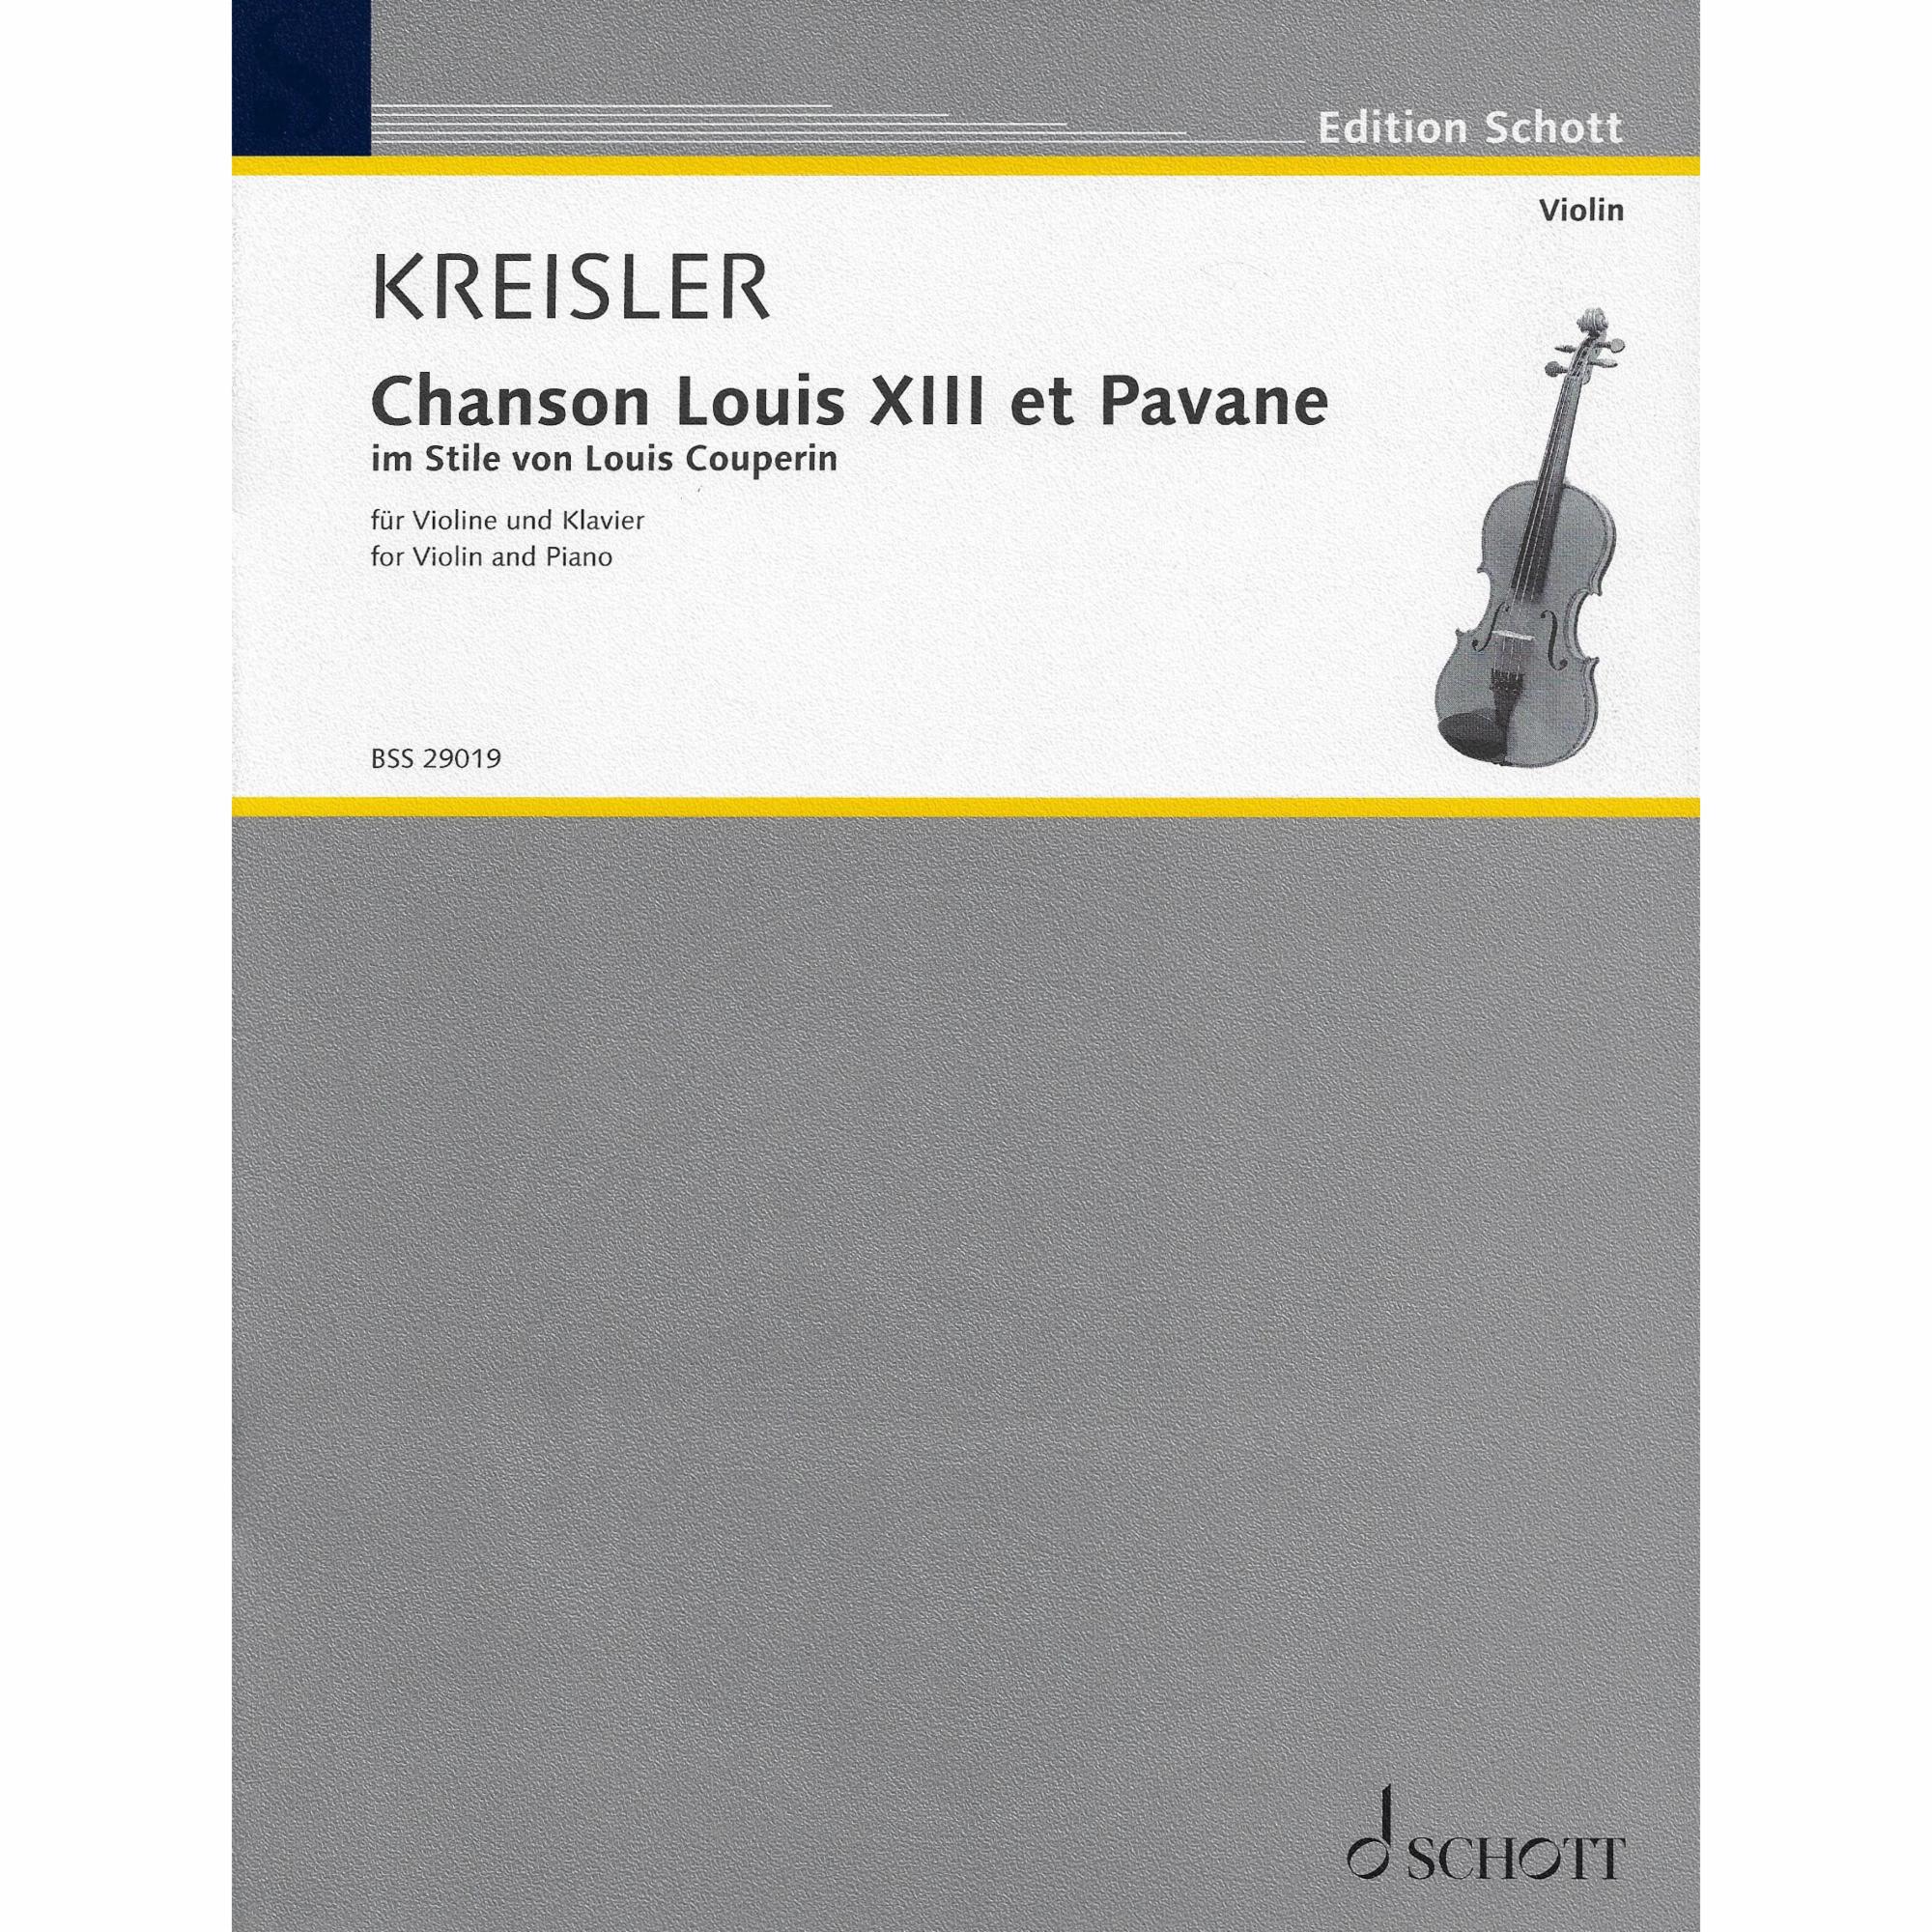 Kreisler -- Chanson Louis XIII et Pavane for Violin and Piano